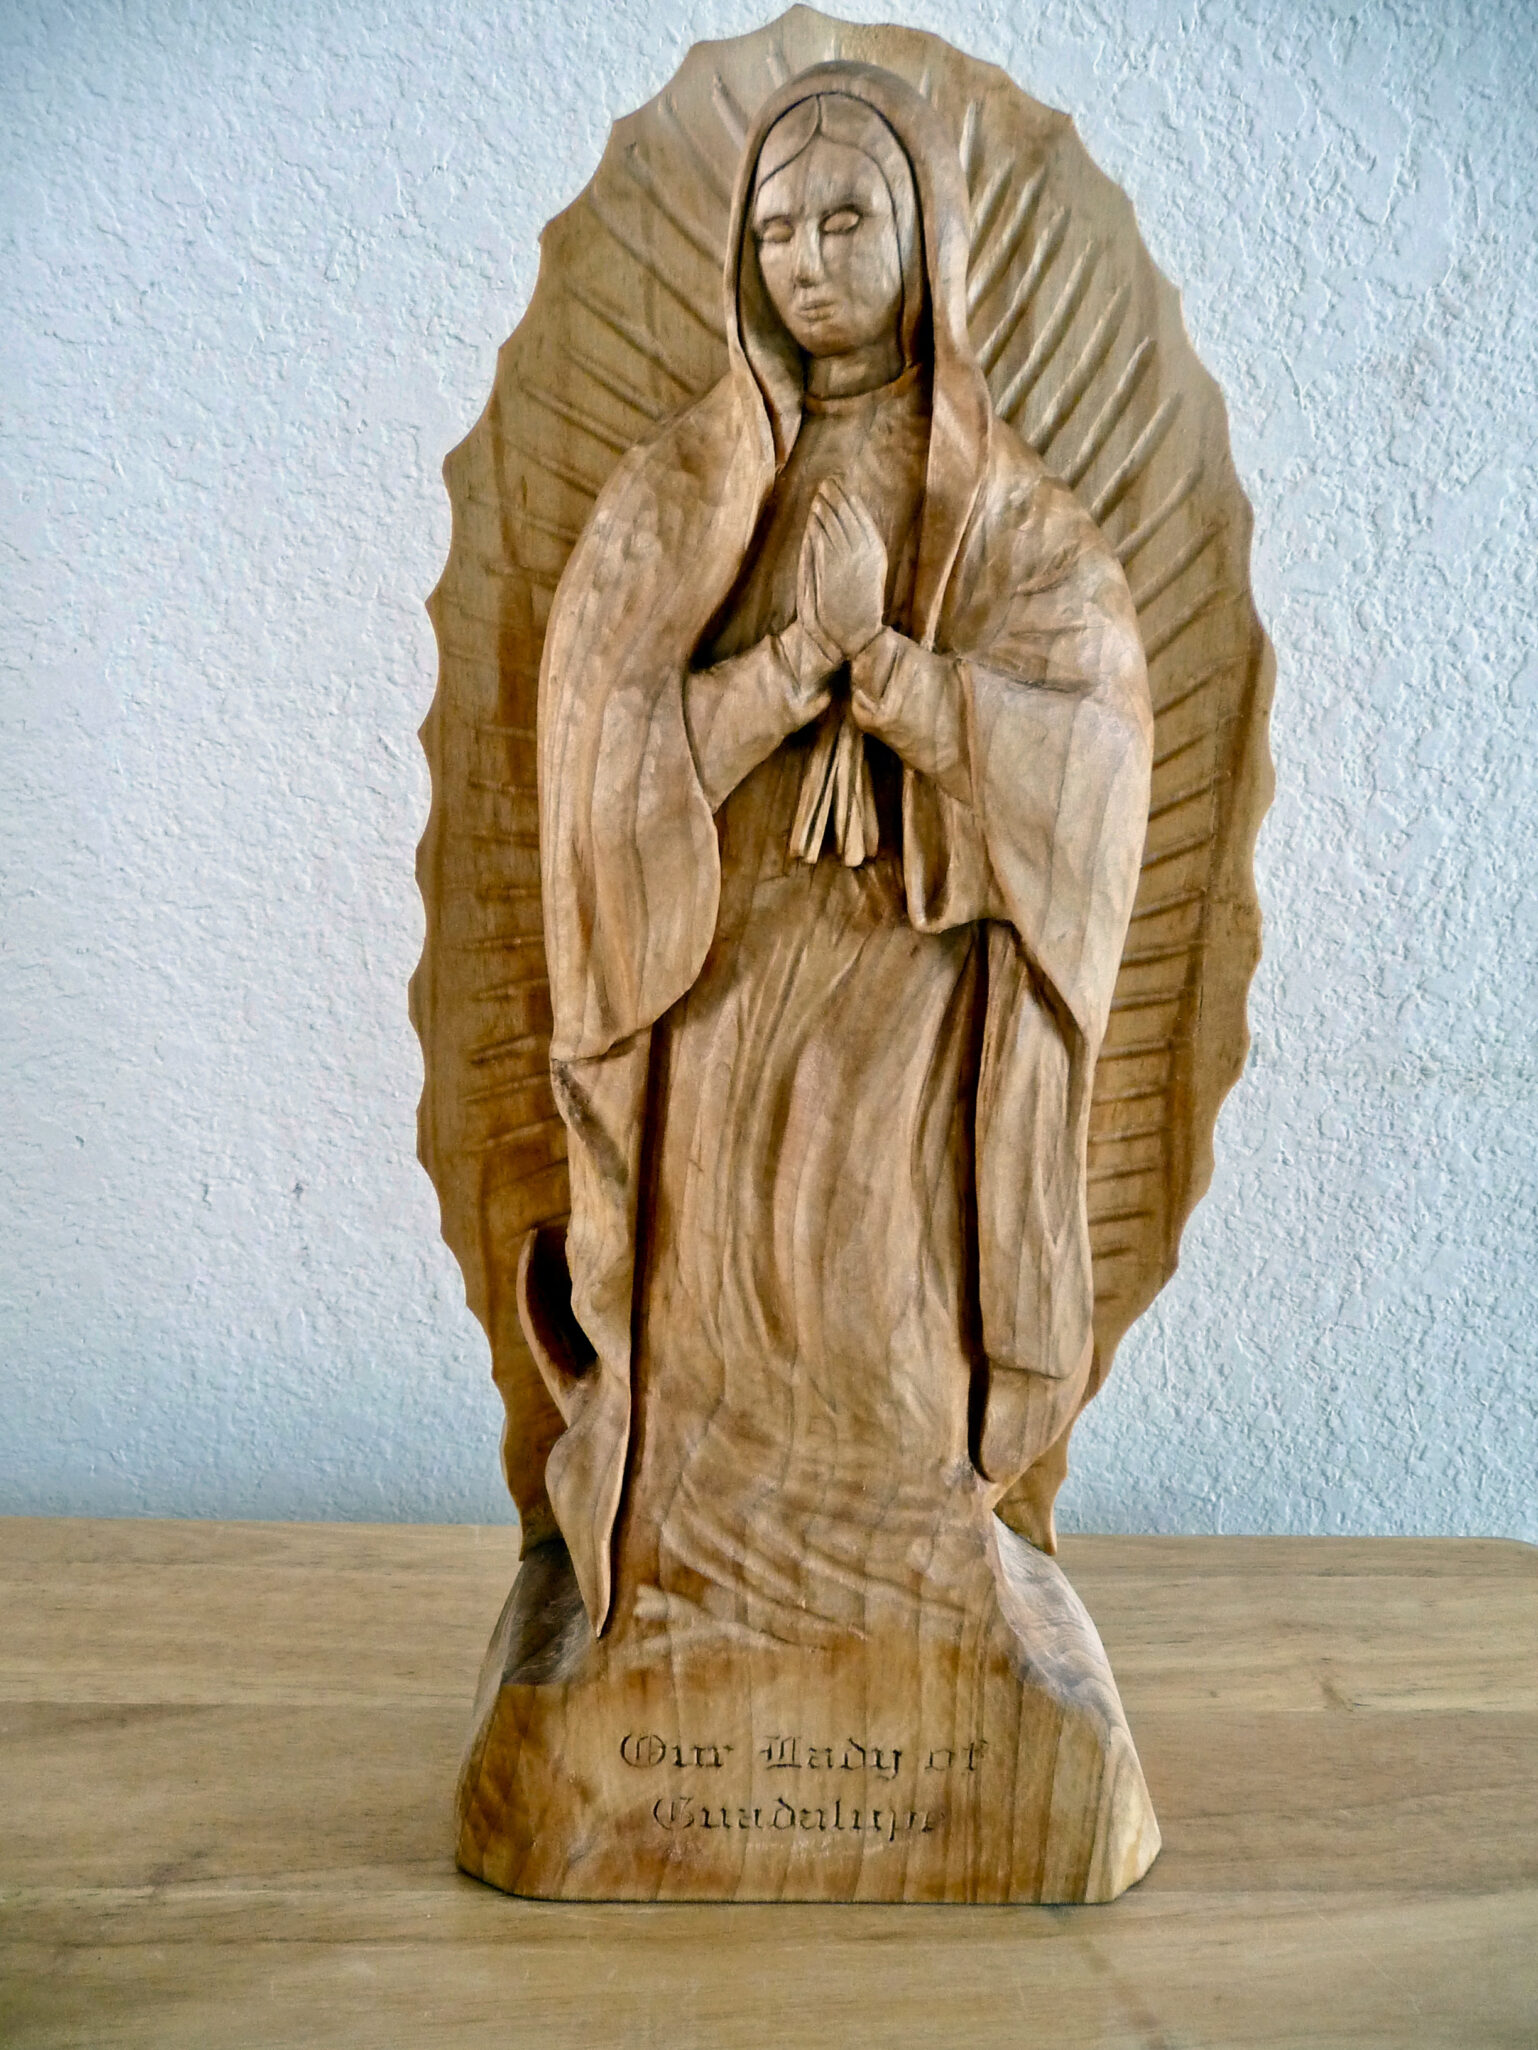 Trillium Woods Resident Felix Tristani's “Lady of Guadalupe” wood sculpture